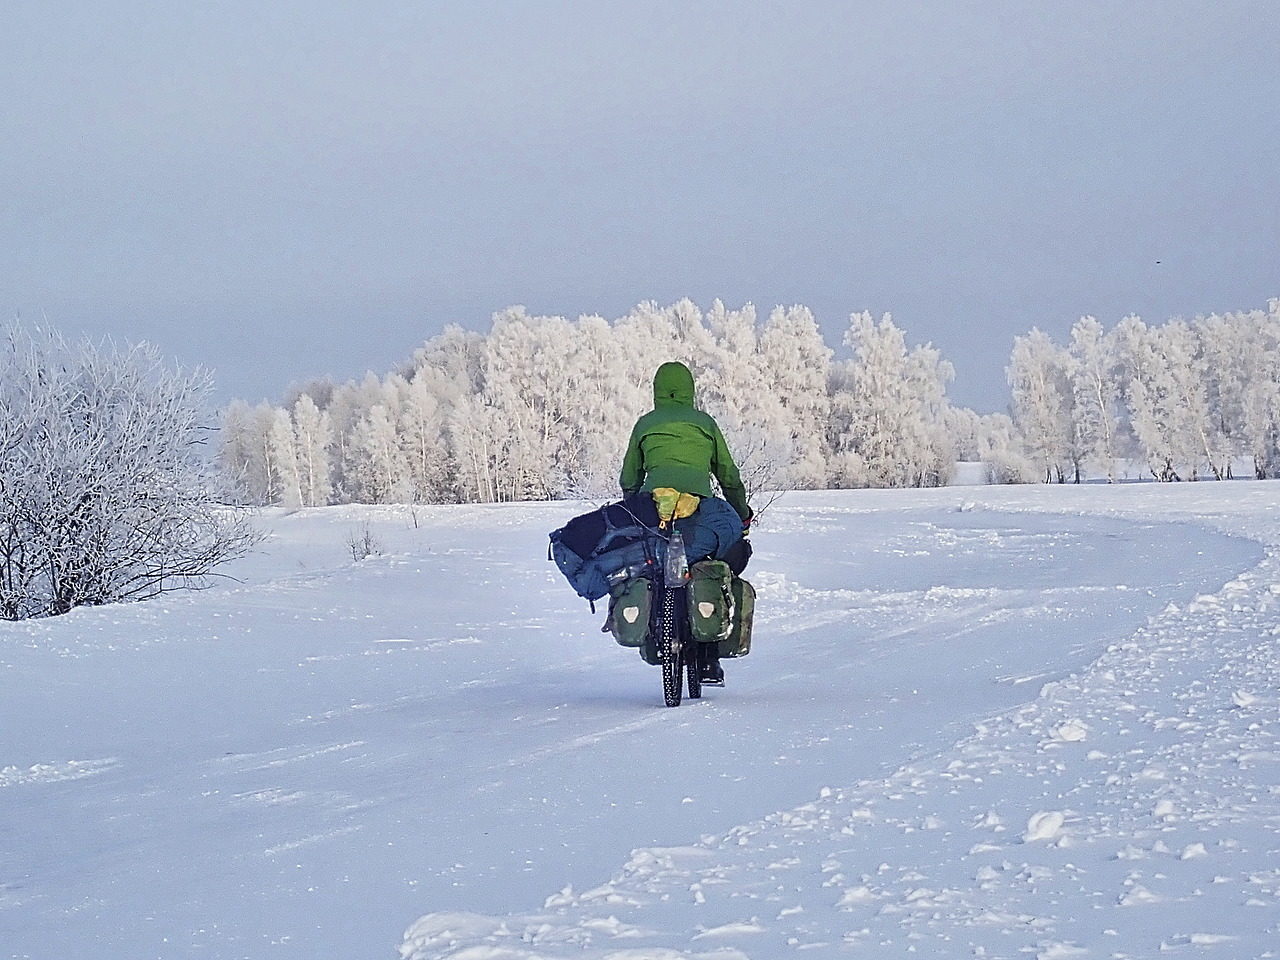 Siberian Winter Wonderland